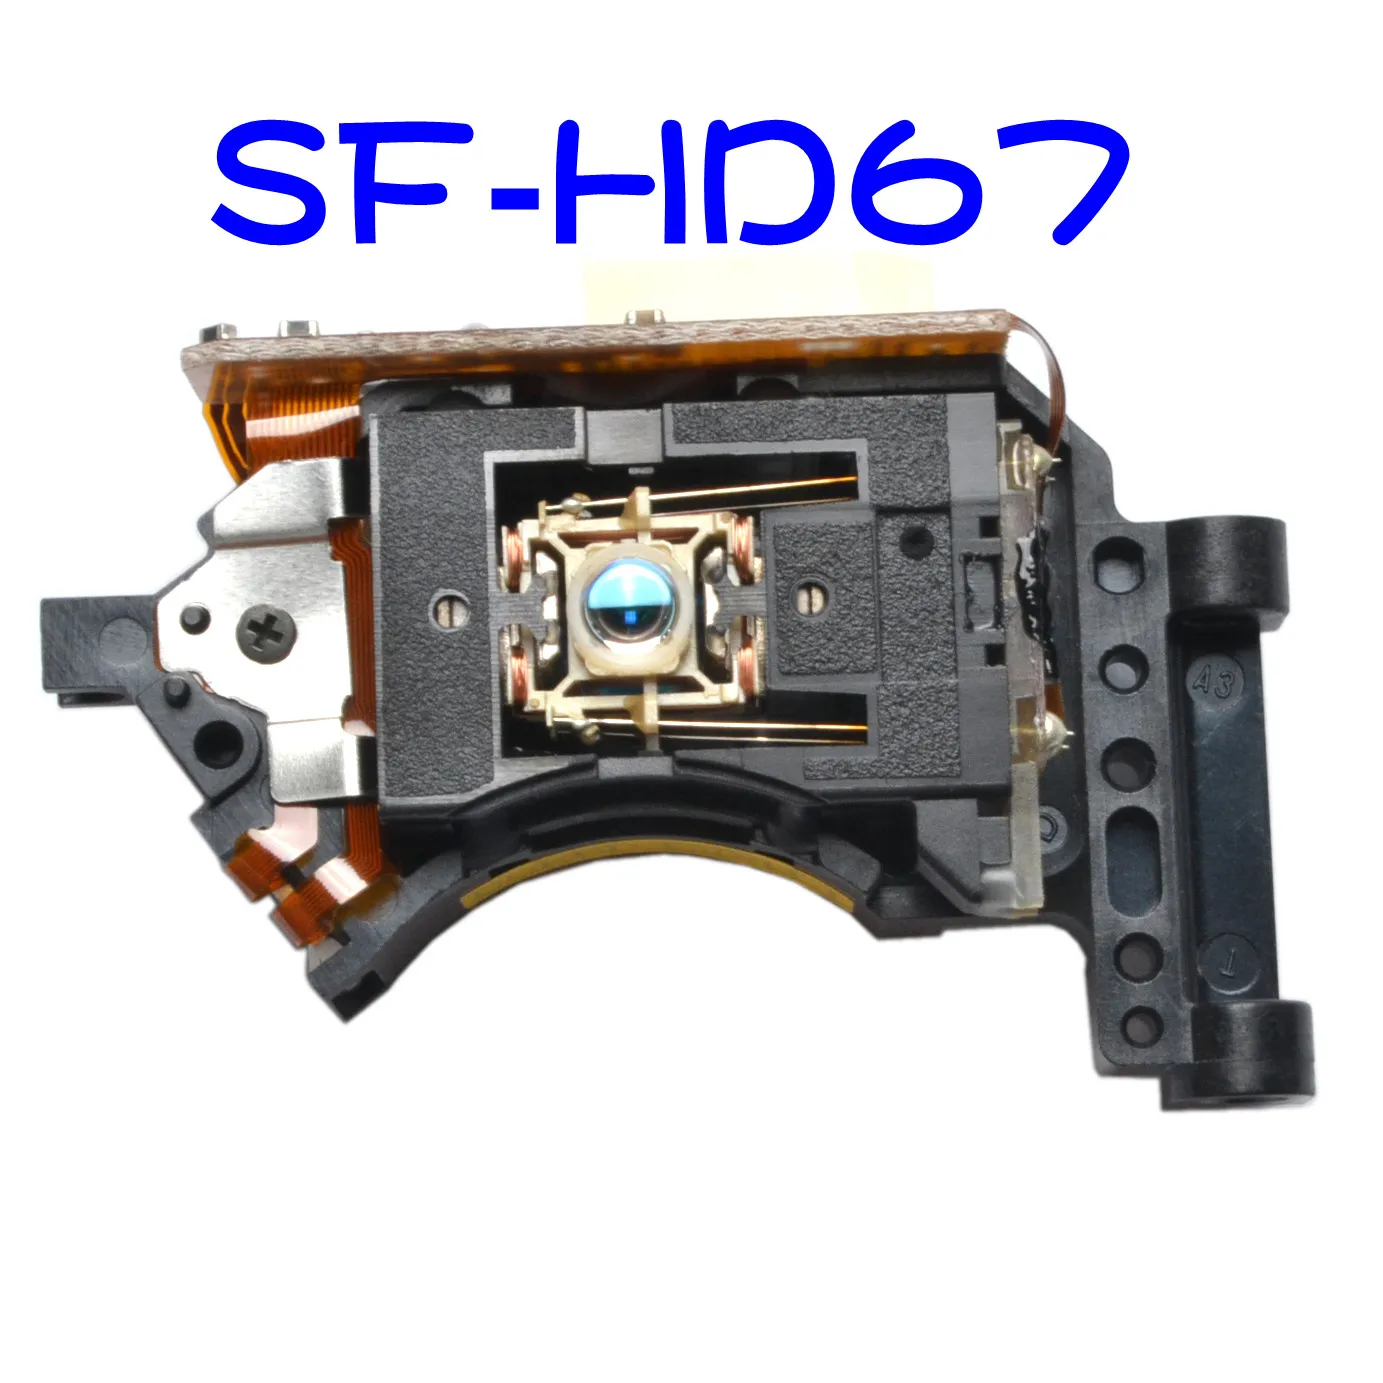 

NEW SF-HD67 SF HD67 Laser Lens Lasereinheit Optical Pick-ups Bloc Repair Replacement For Xbox 360 Microsoft Xbox360 Fat